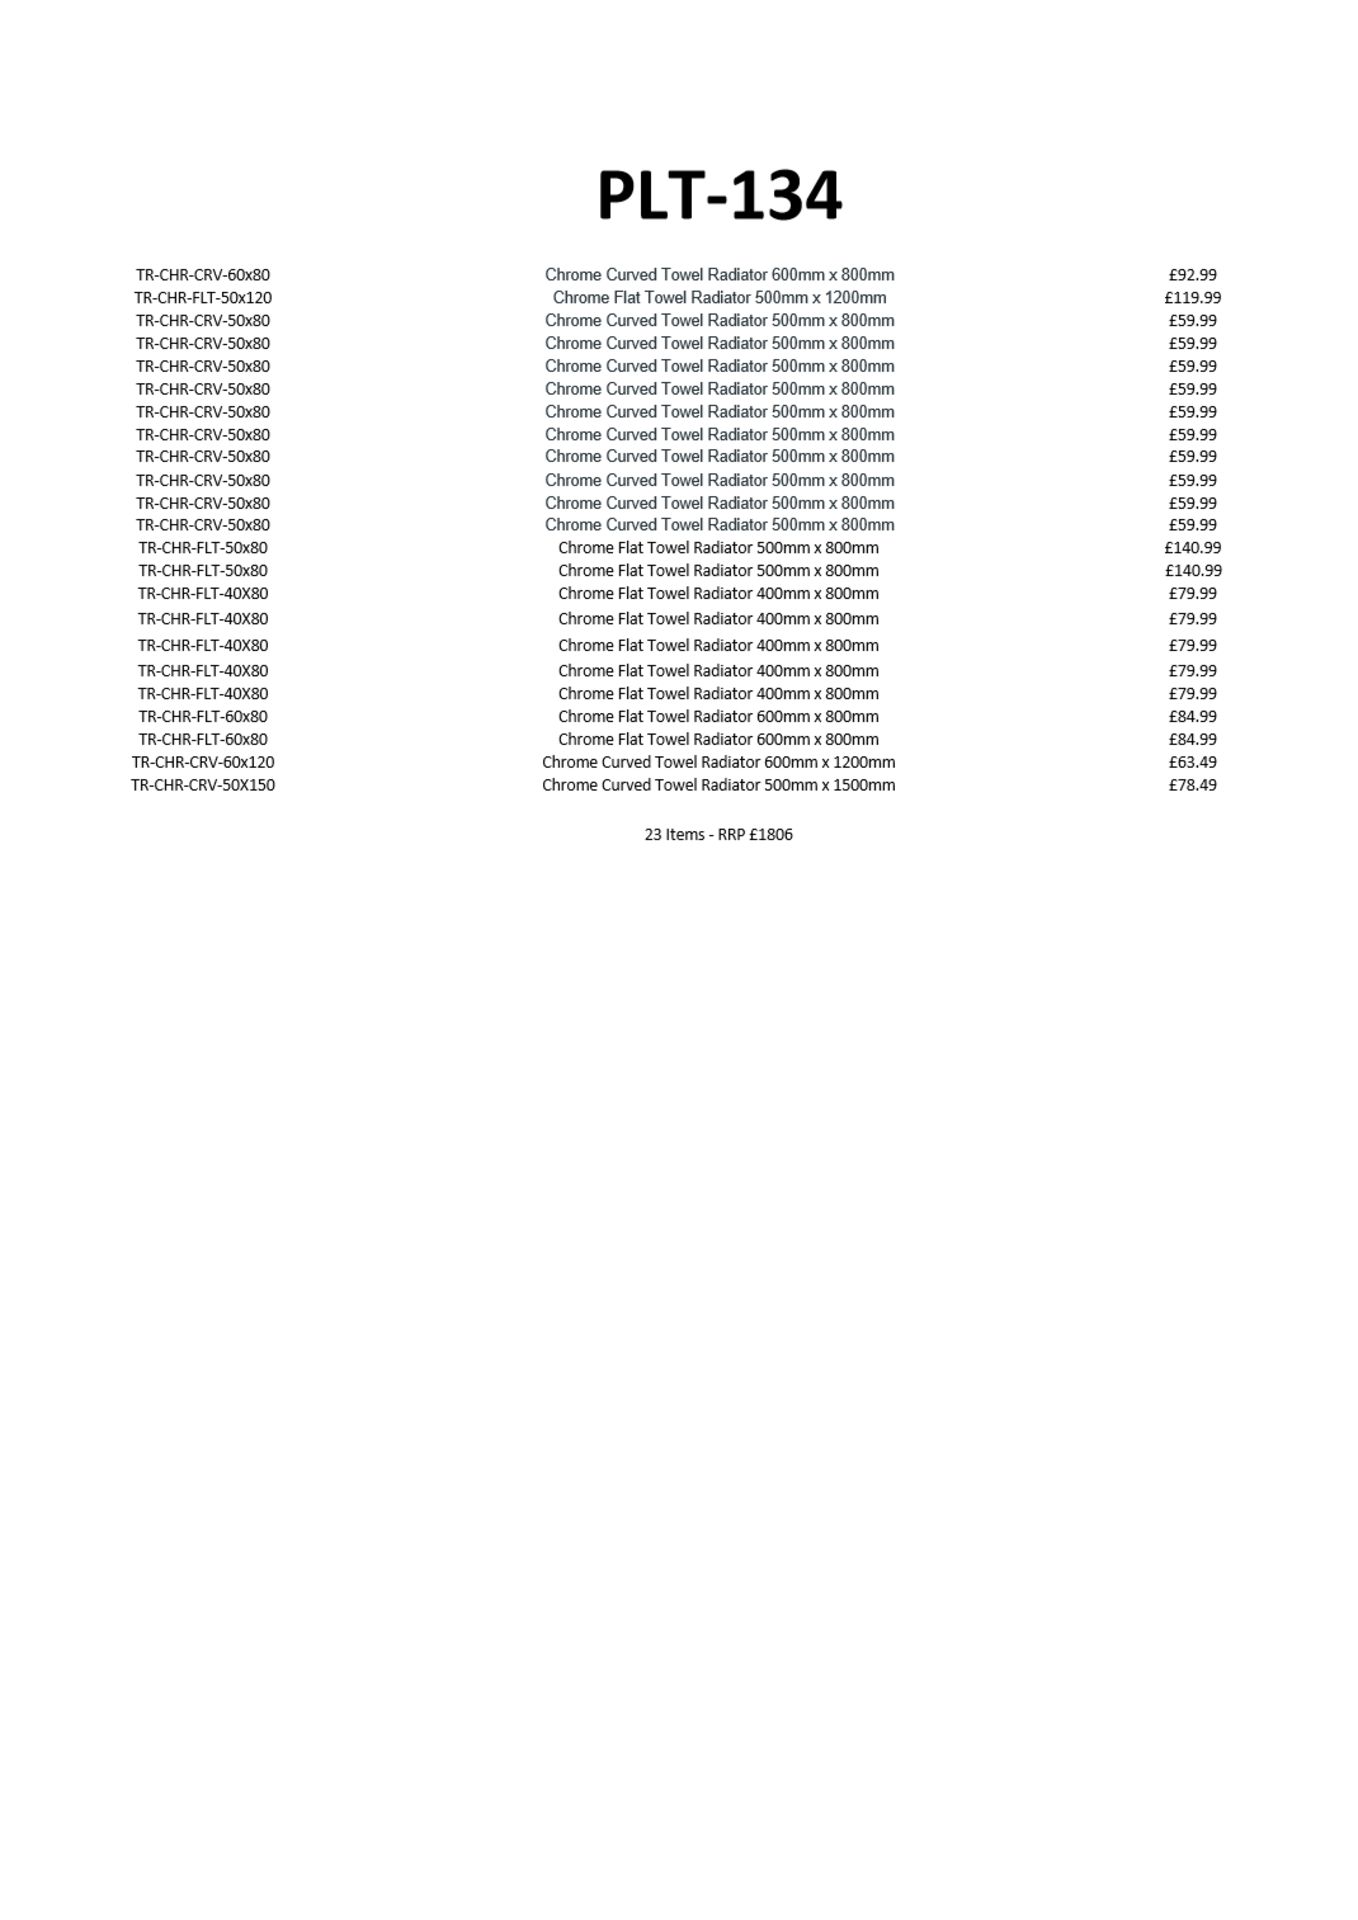 (New Stock) Towel Radiator DIHL Overstock New 23 Items - RRP £1806 P134 - Image 2 of 4